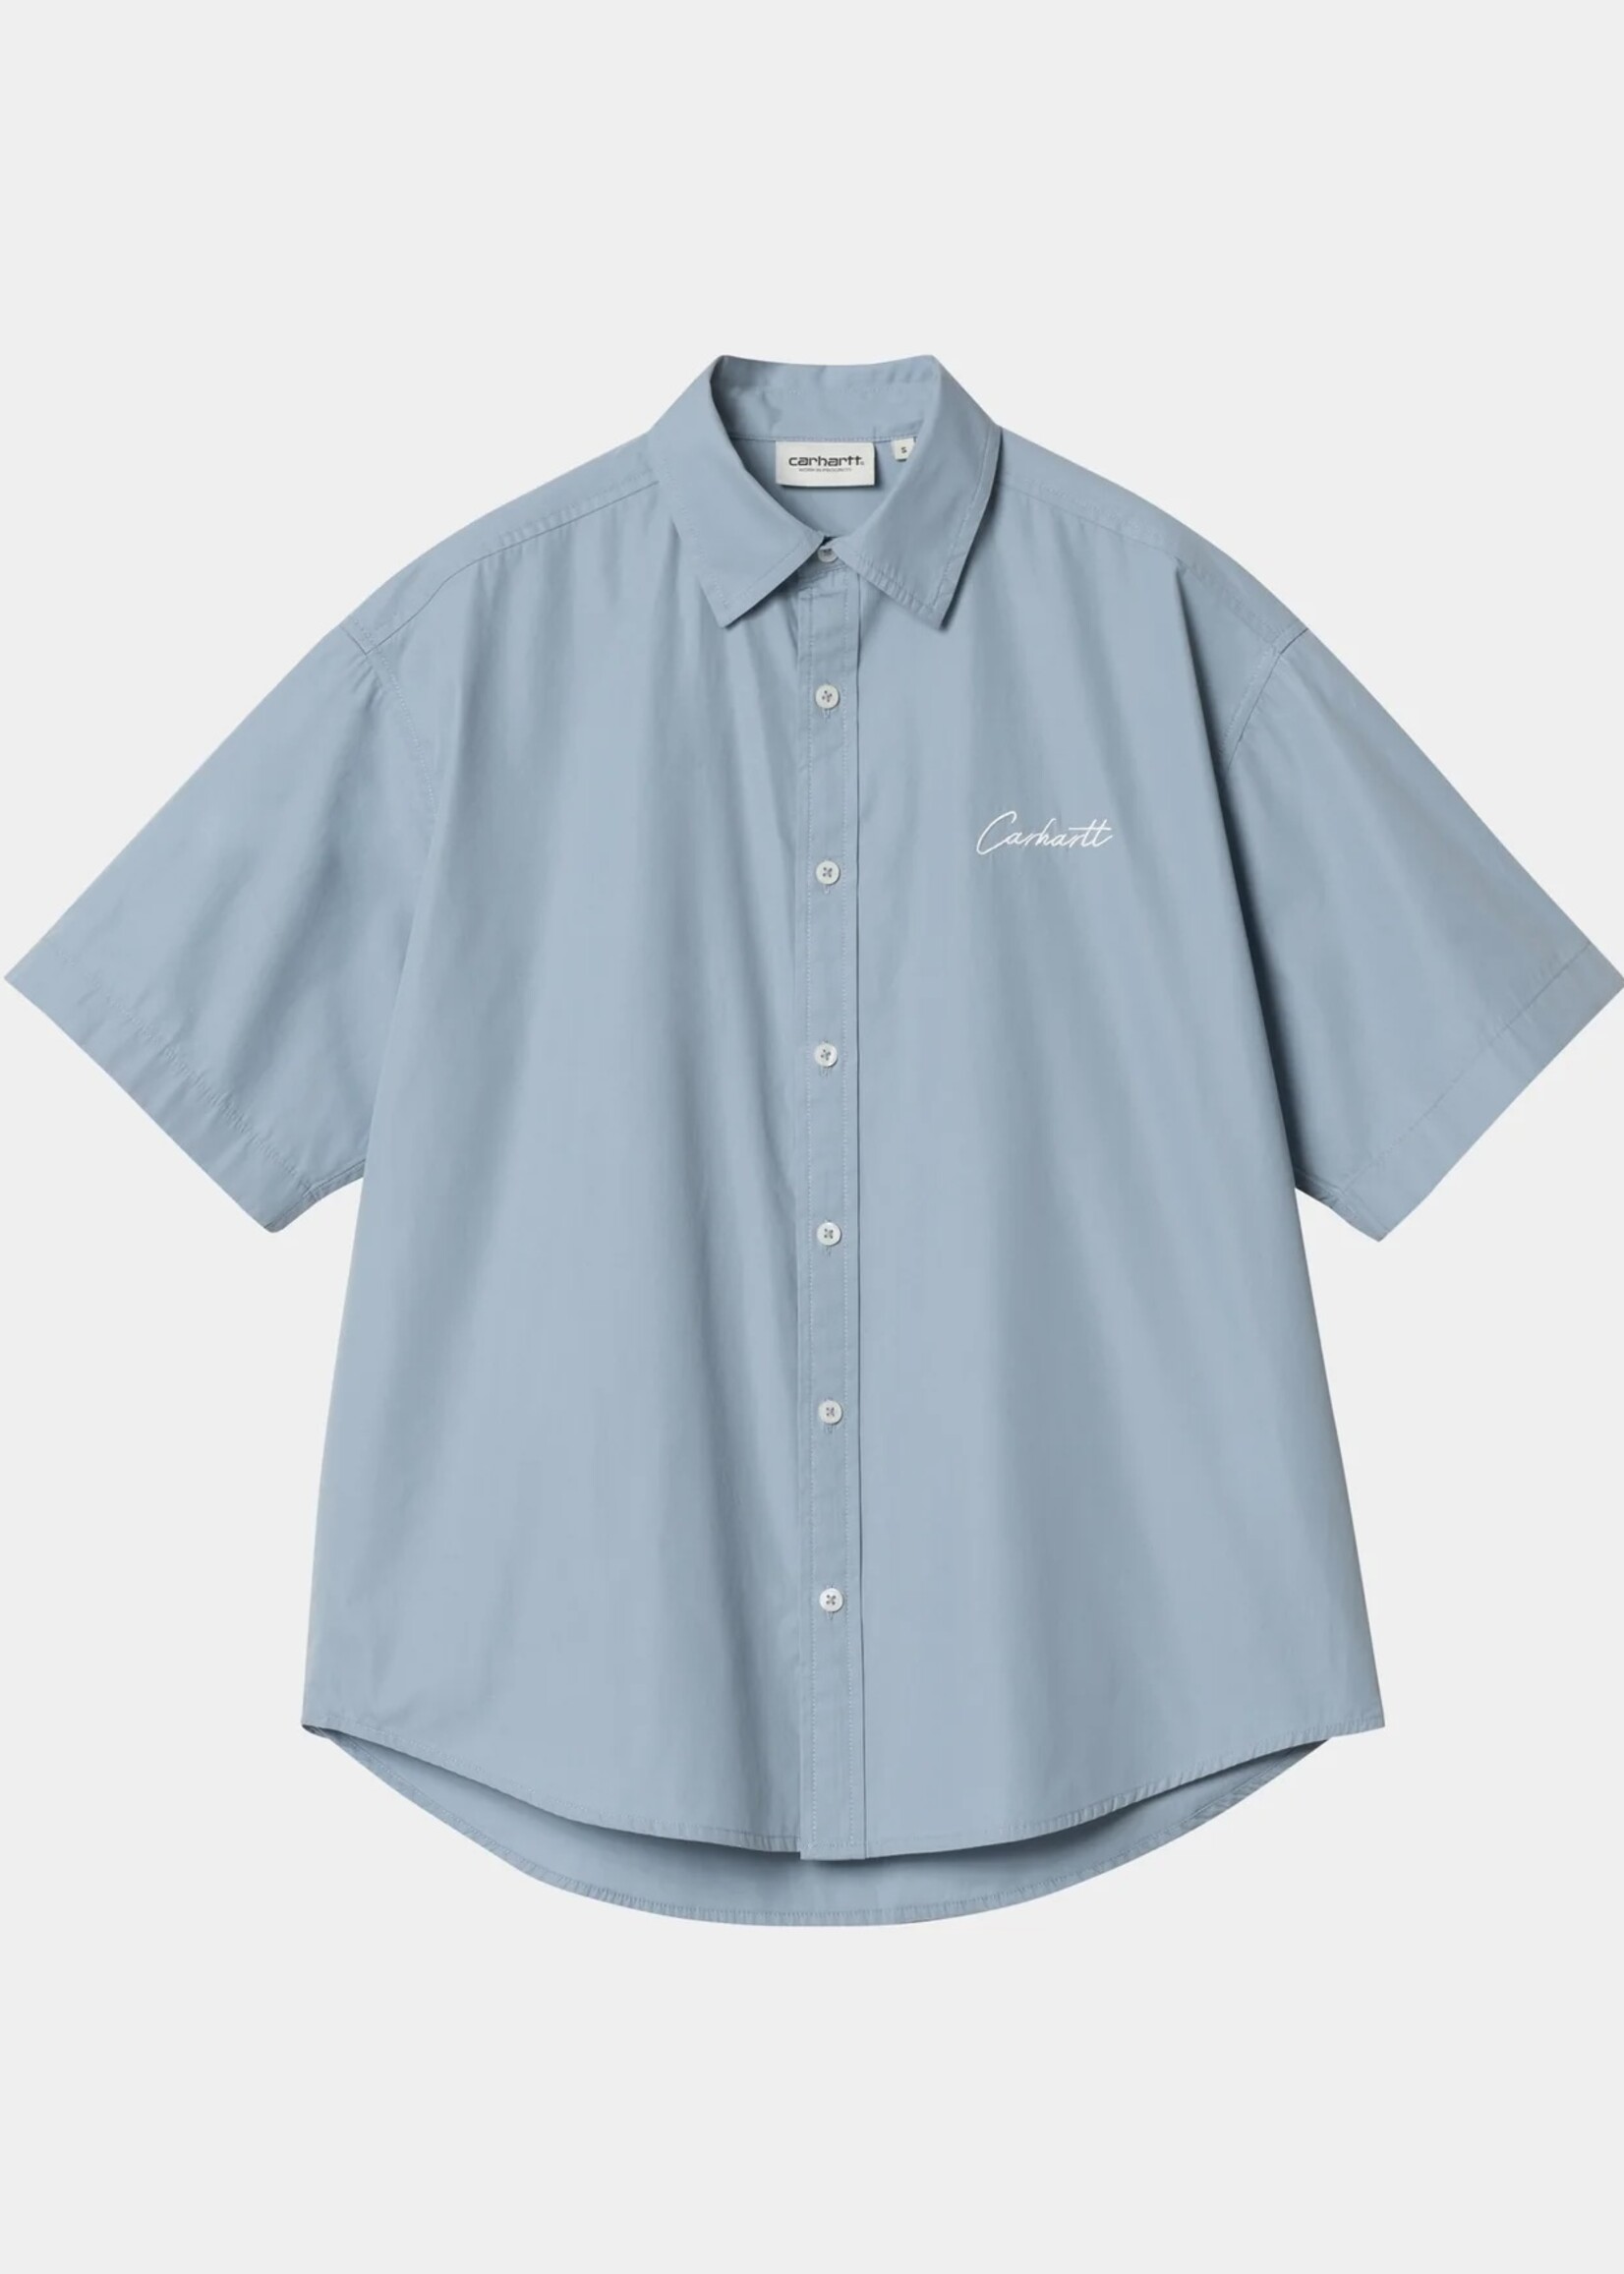 Carhartt Work In Progress Women's Jaxon Oversized Button Up Shirt in Frosted Blue